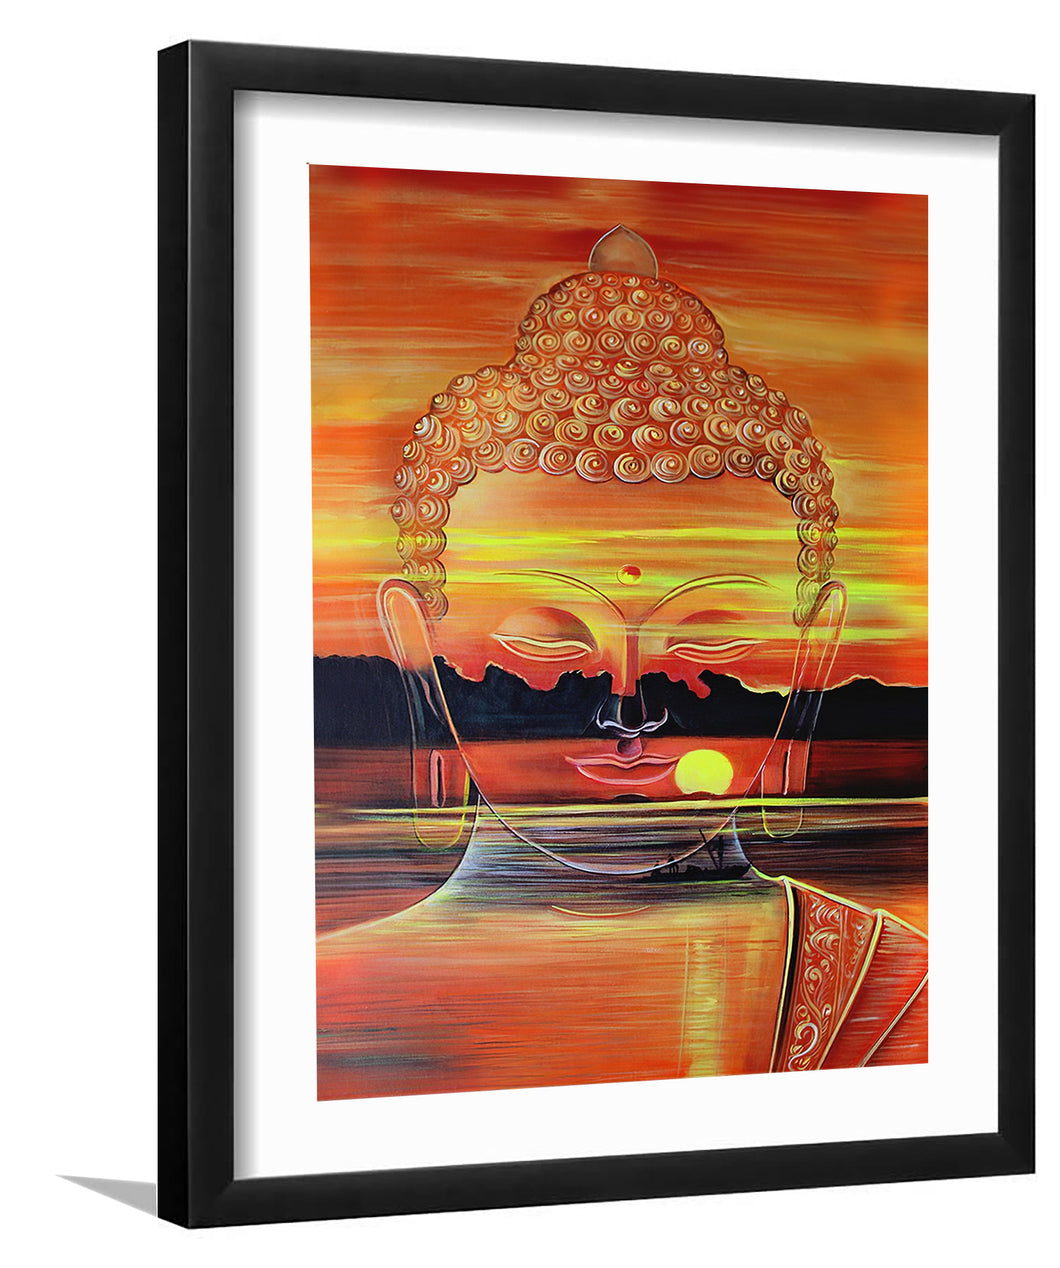 Lord Buddha Meditation Beautiful Sun and Sea Landscape - Framed Prints, Painting Art, Art Print, Framed Art, Black Frame